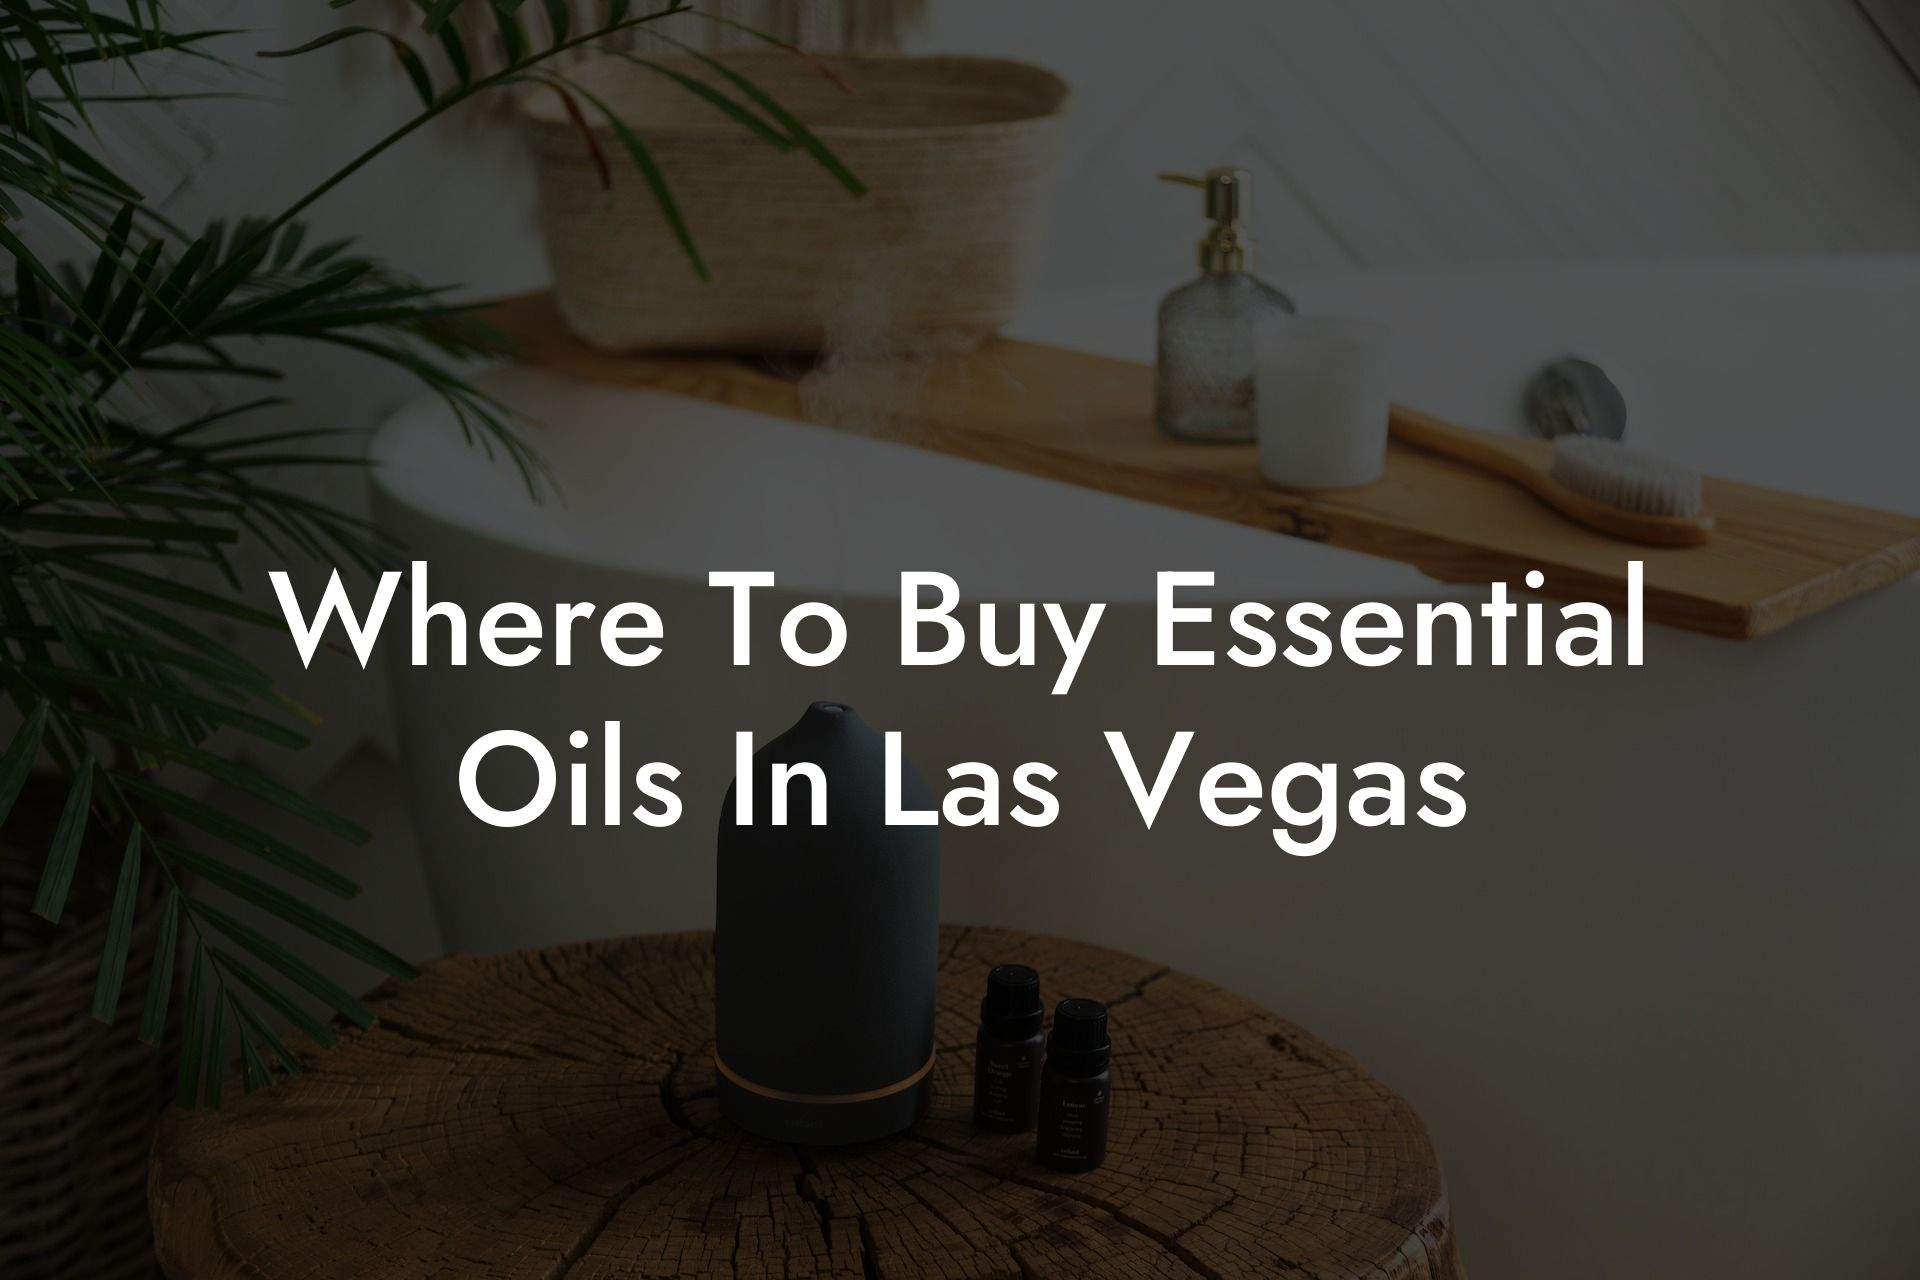 Where To Buy Essential Oils In Las Vegas